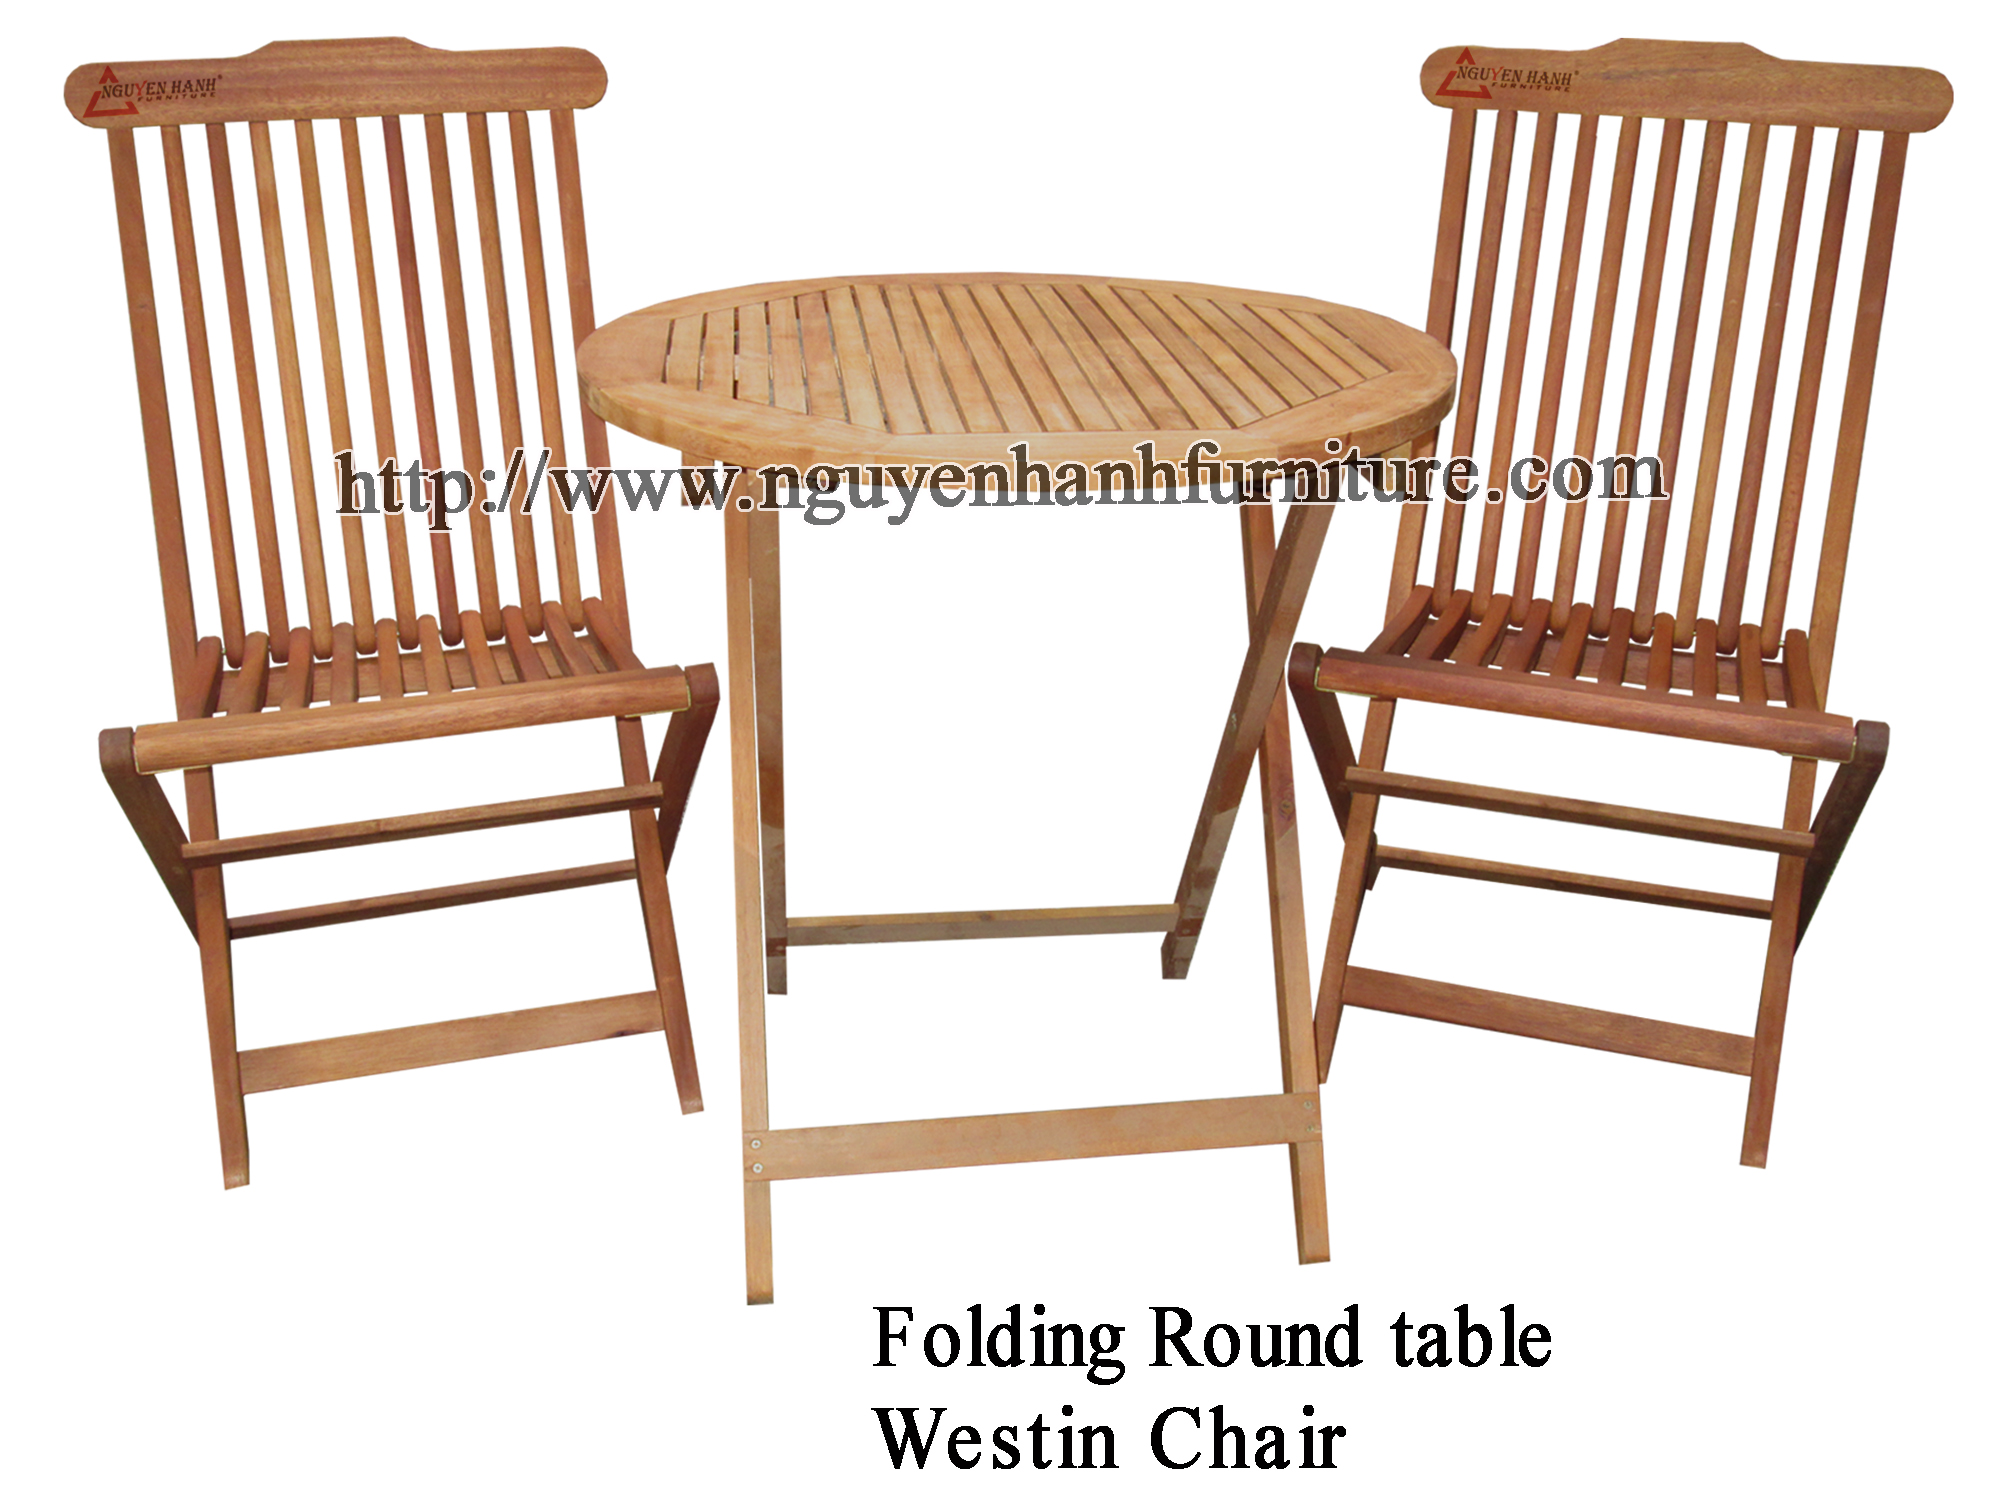 Name product: Folding Round table 70 + Westin Chair - Description: Eucalyptus wood